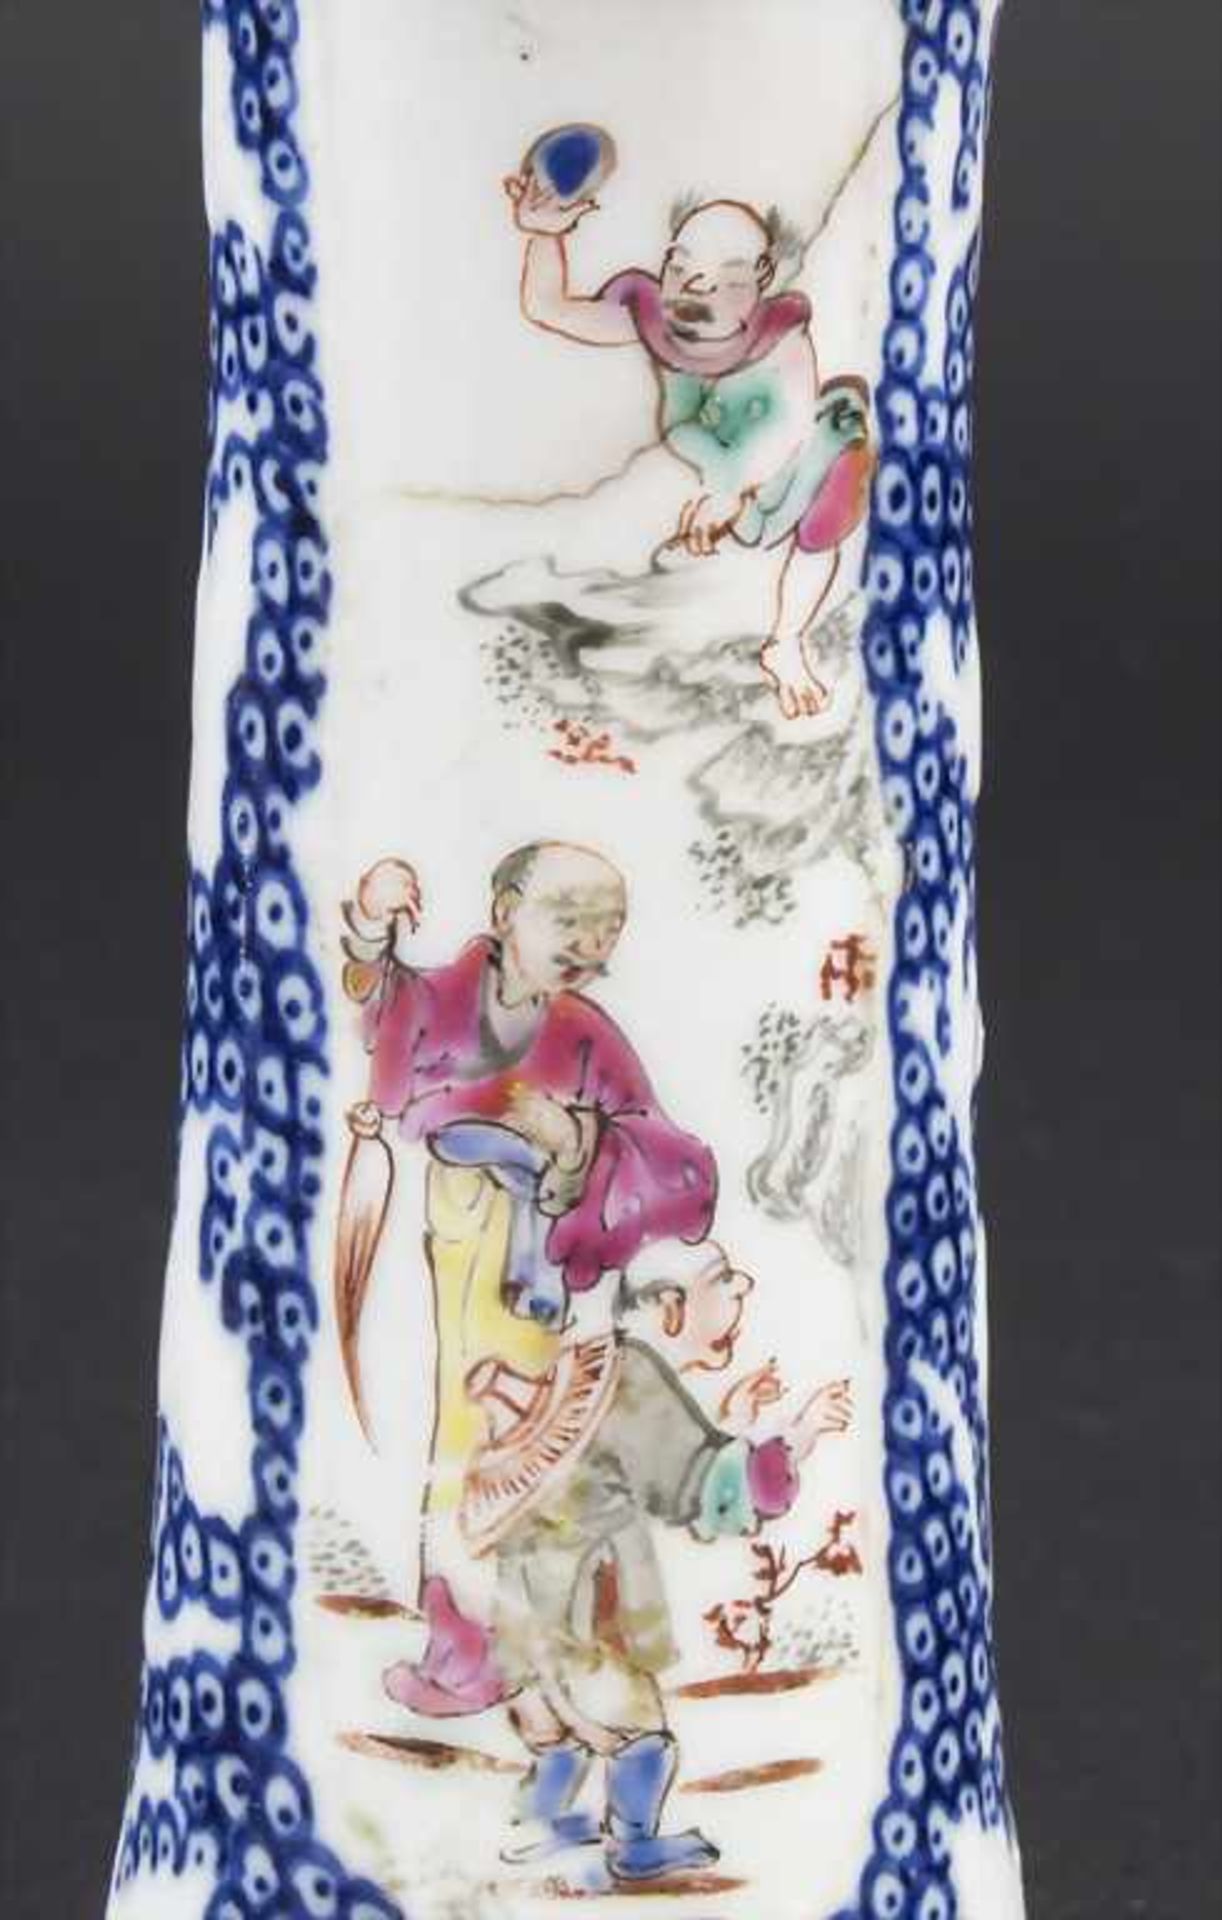 Ziervase / A decorative porcelain vase, China, Qing Dynastie (1644-1911), 18. Jh. - Image 8 of 9